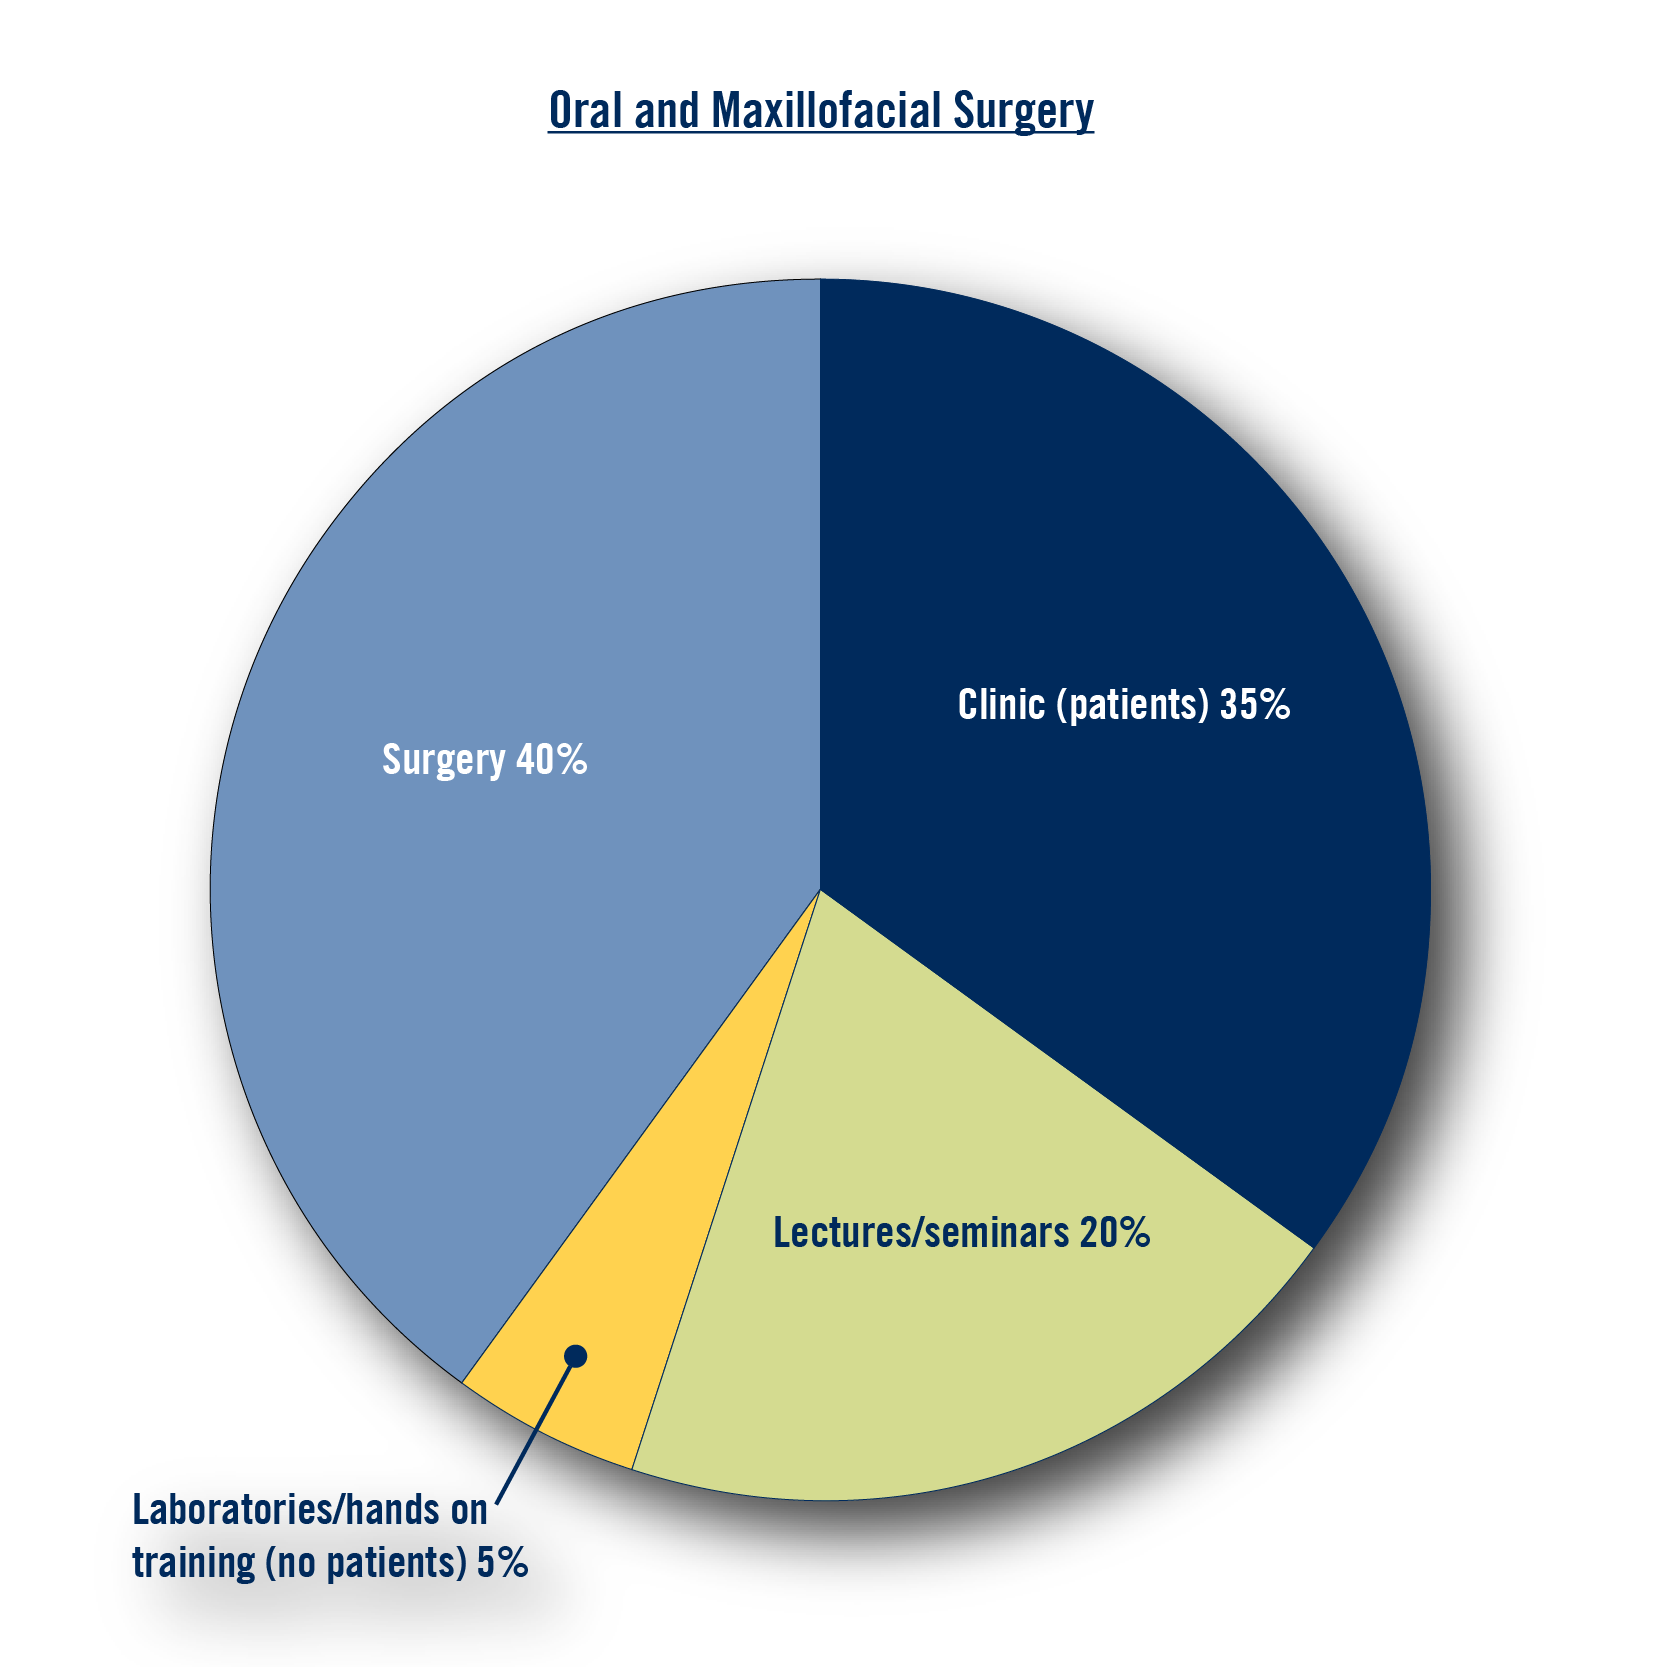 Clinic (patients) 35%, Lectures/seminars 20%, Laboratories/hands on training (no patients) 5%, Surgery 40%